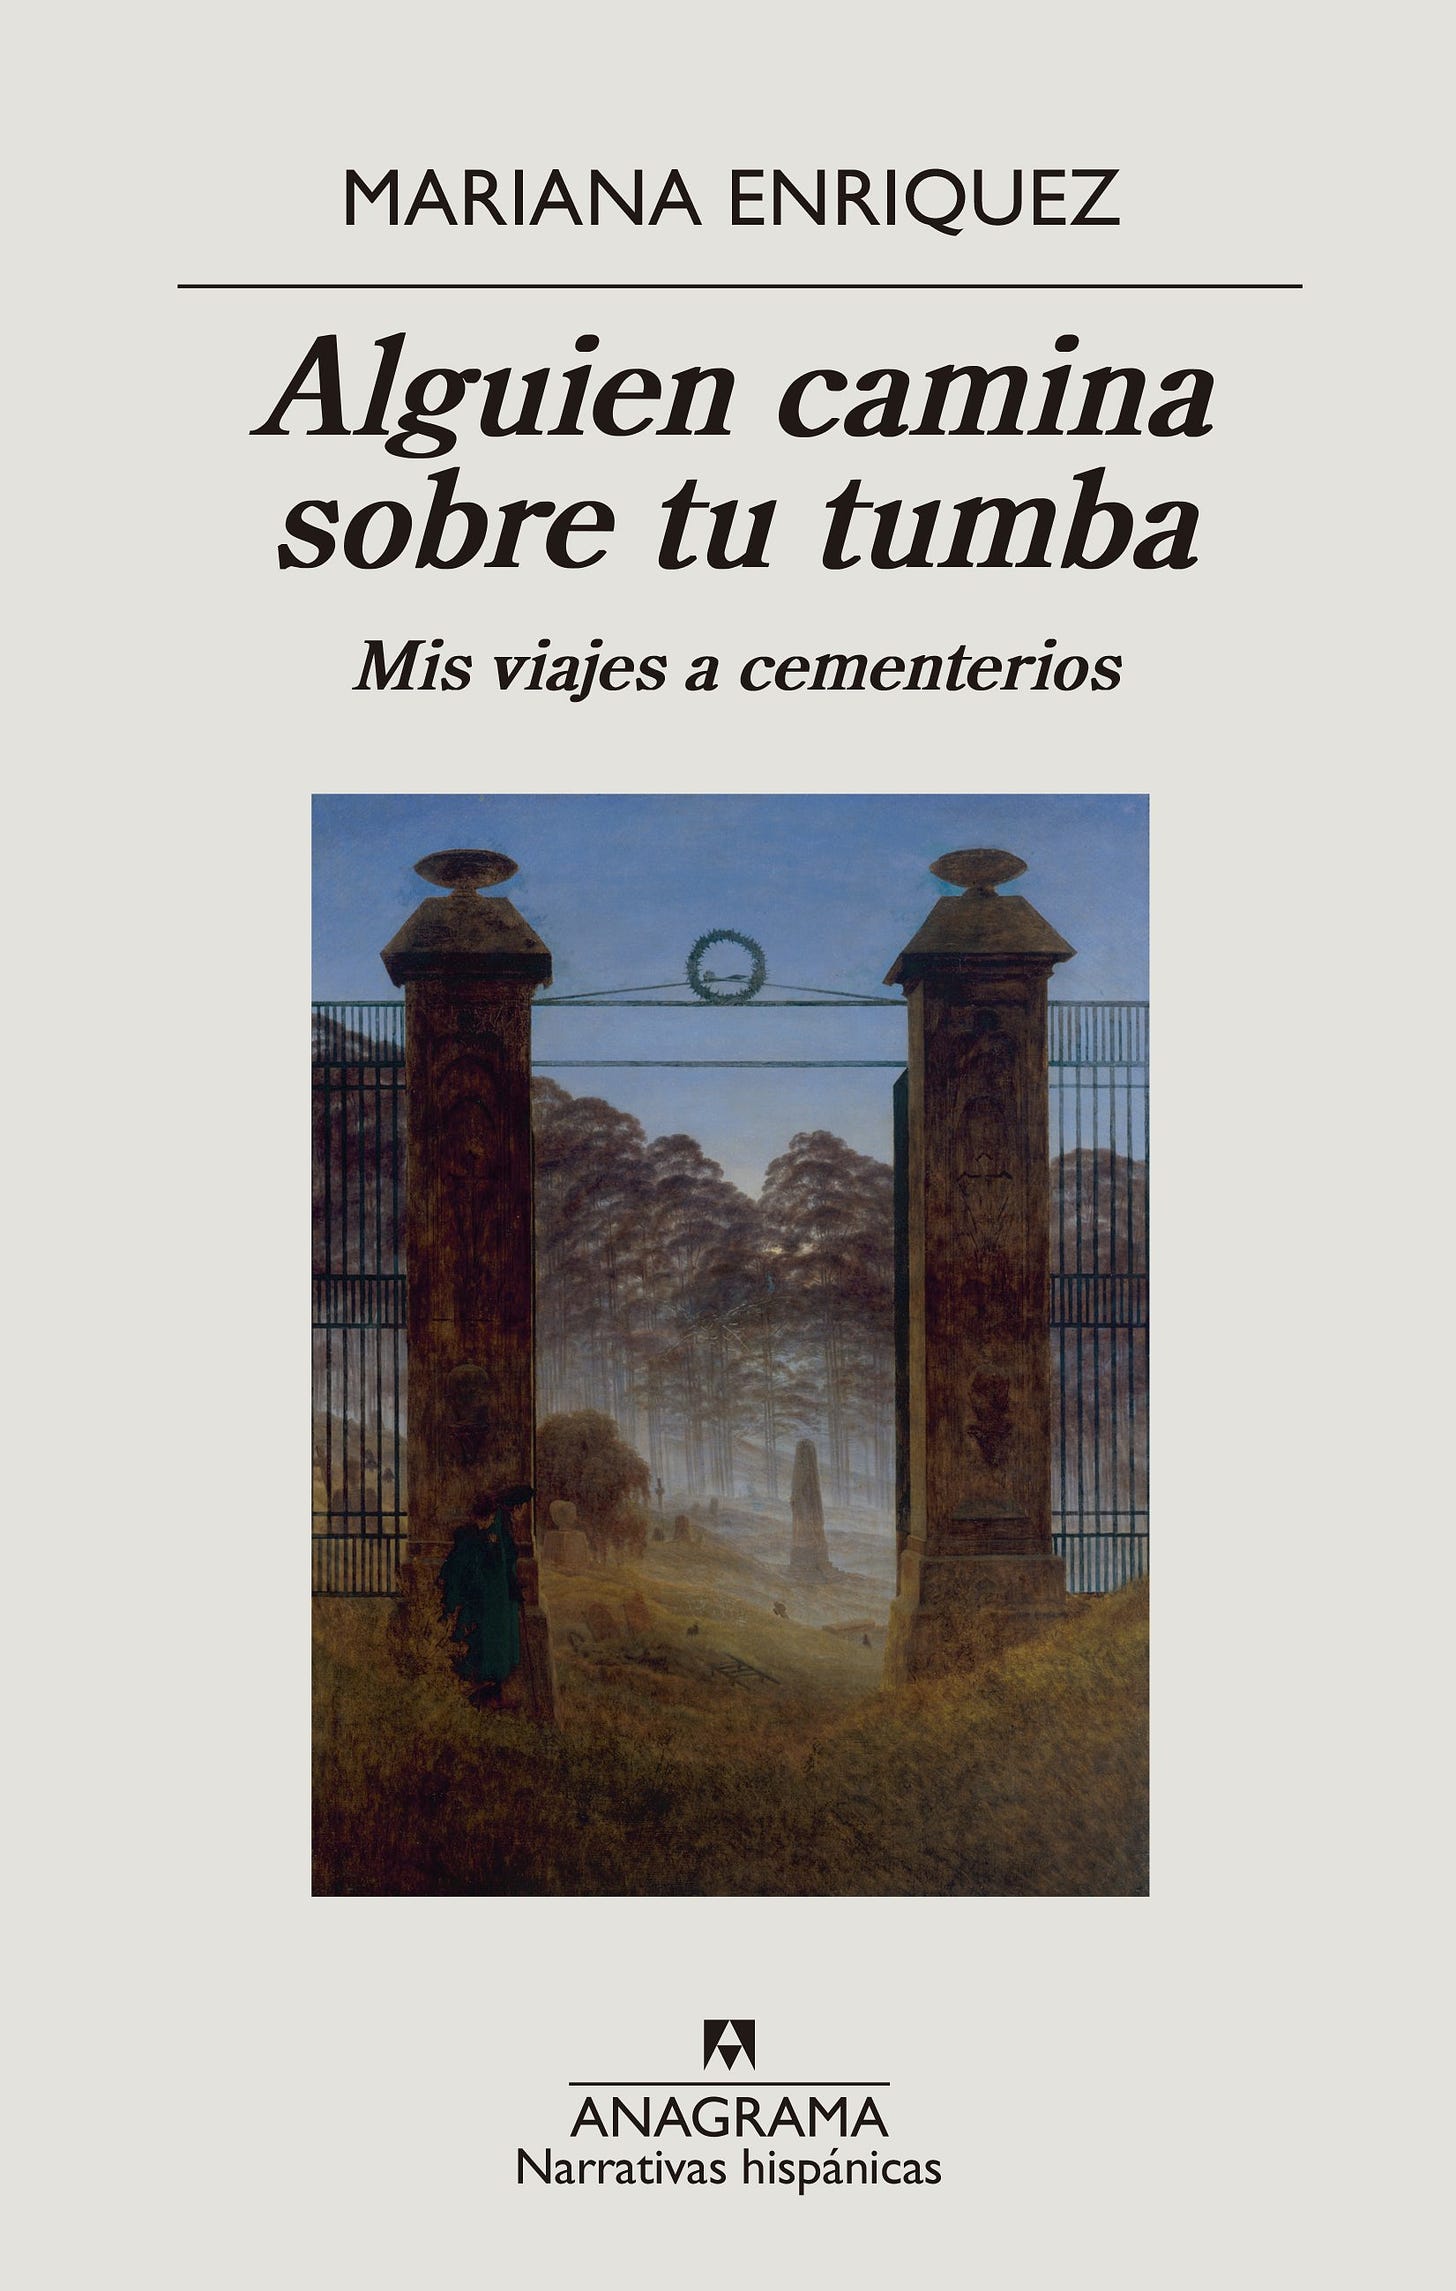 Alguien camina sobre tu tumba - Enriquez, Mariana - 978-84-339-9923-8 -  Editorial Anagrama